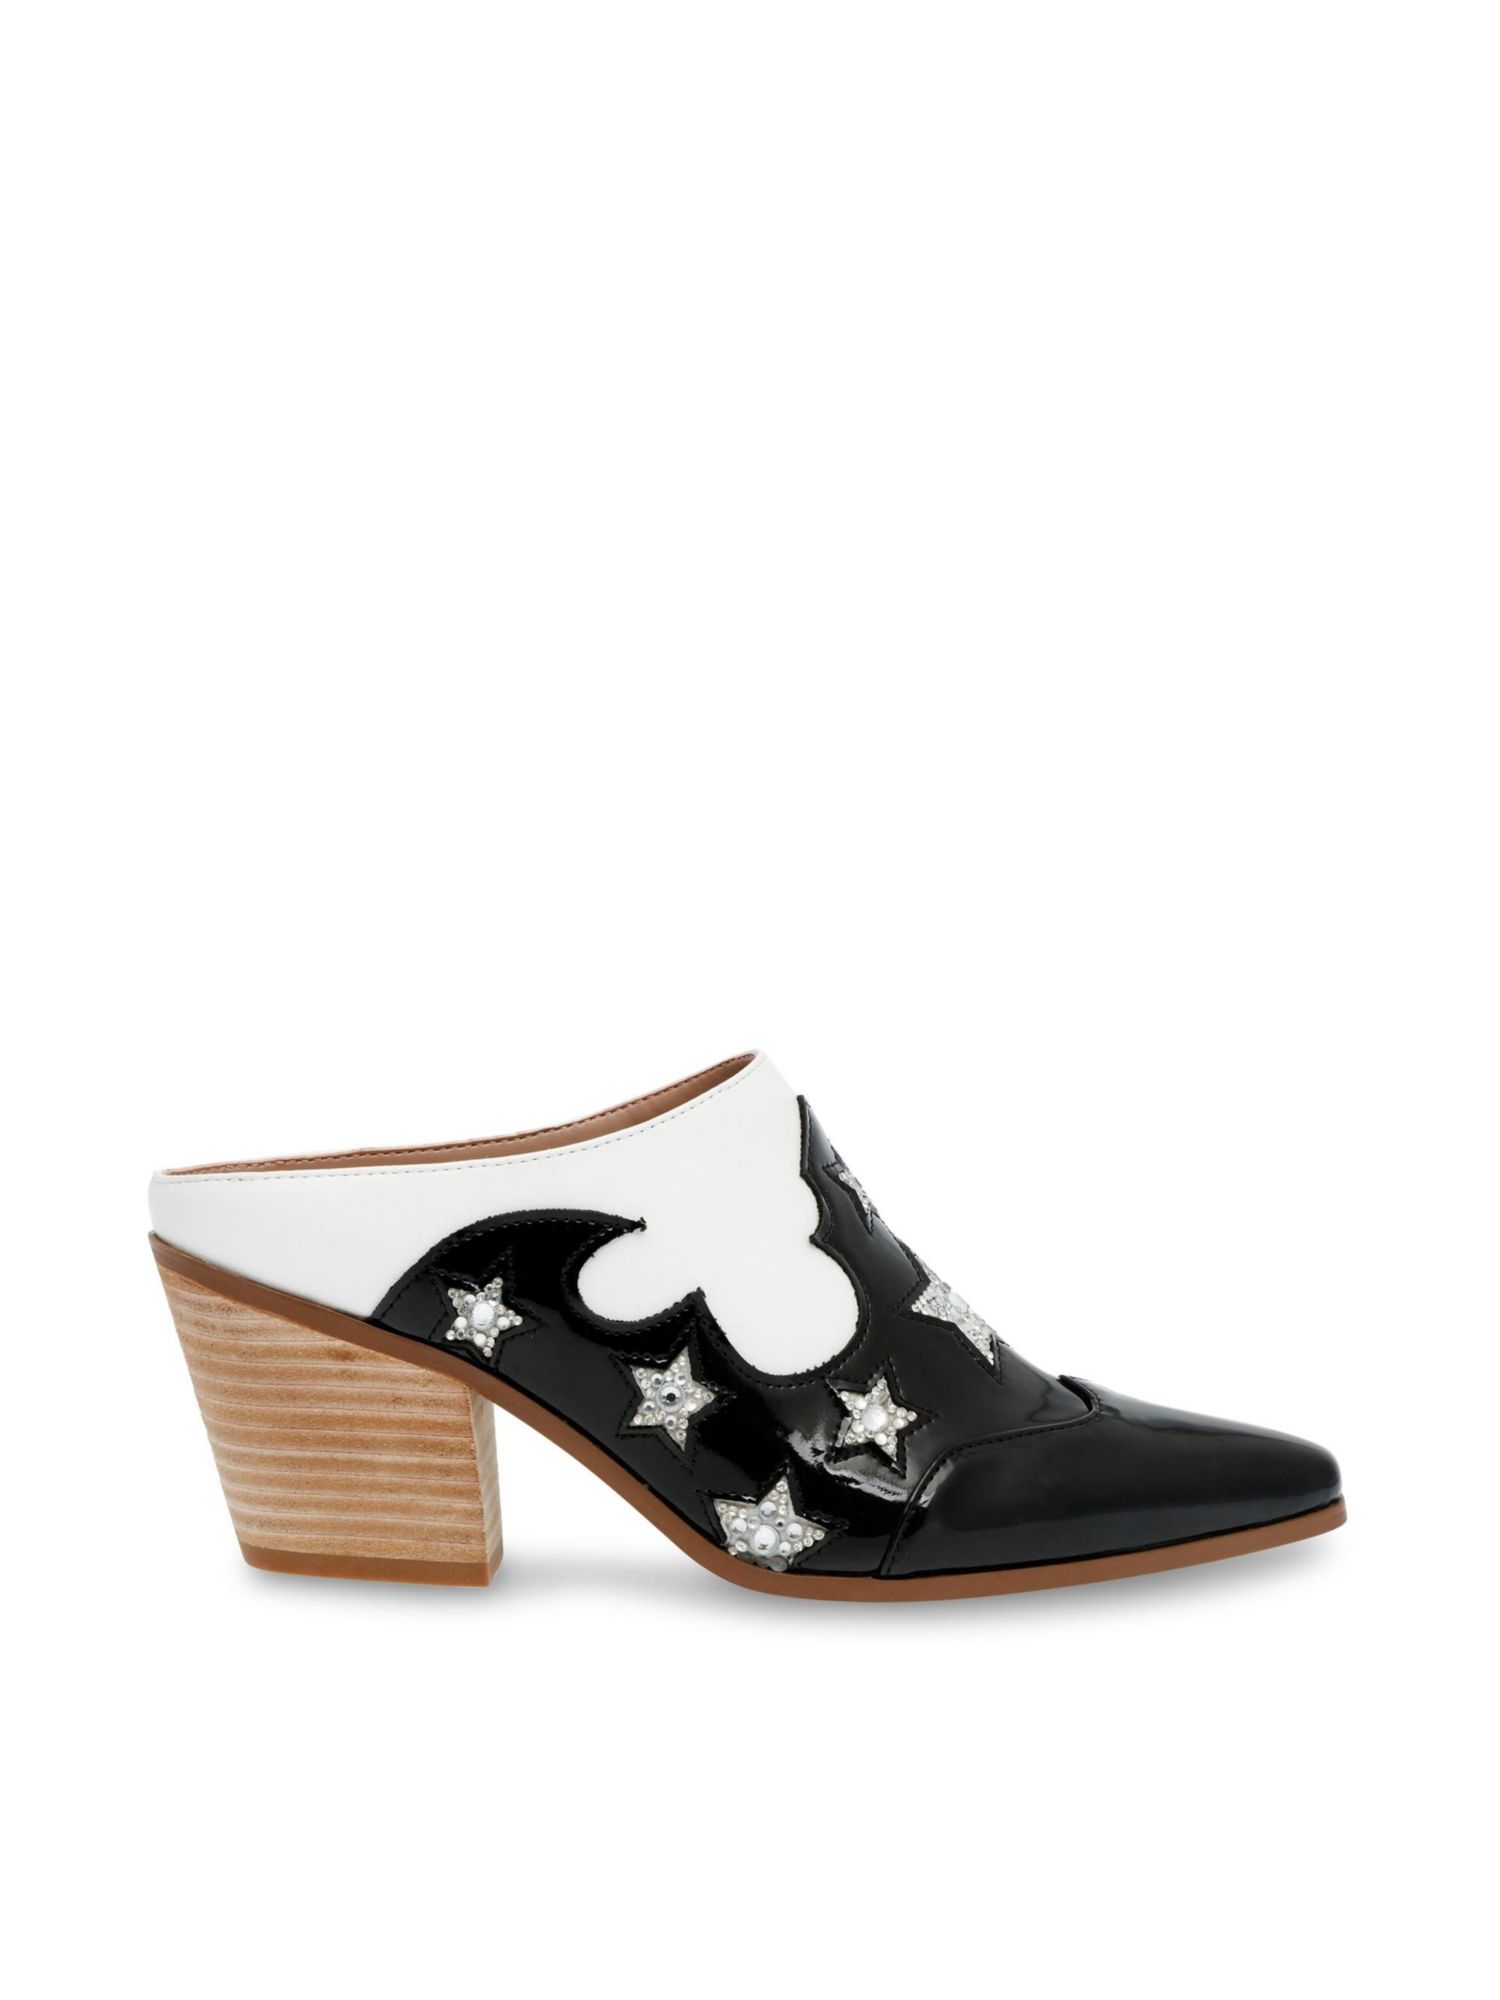 BETSEY JOHNSON Womens Black Western Dennis Almond Heeled Mules Shoes 9.5 M